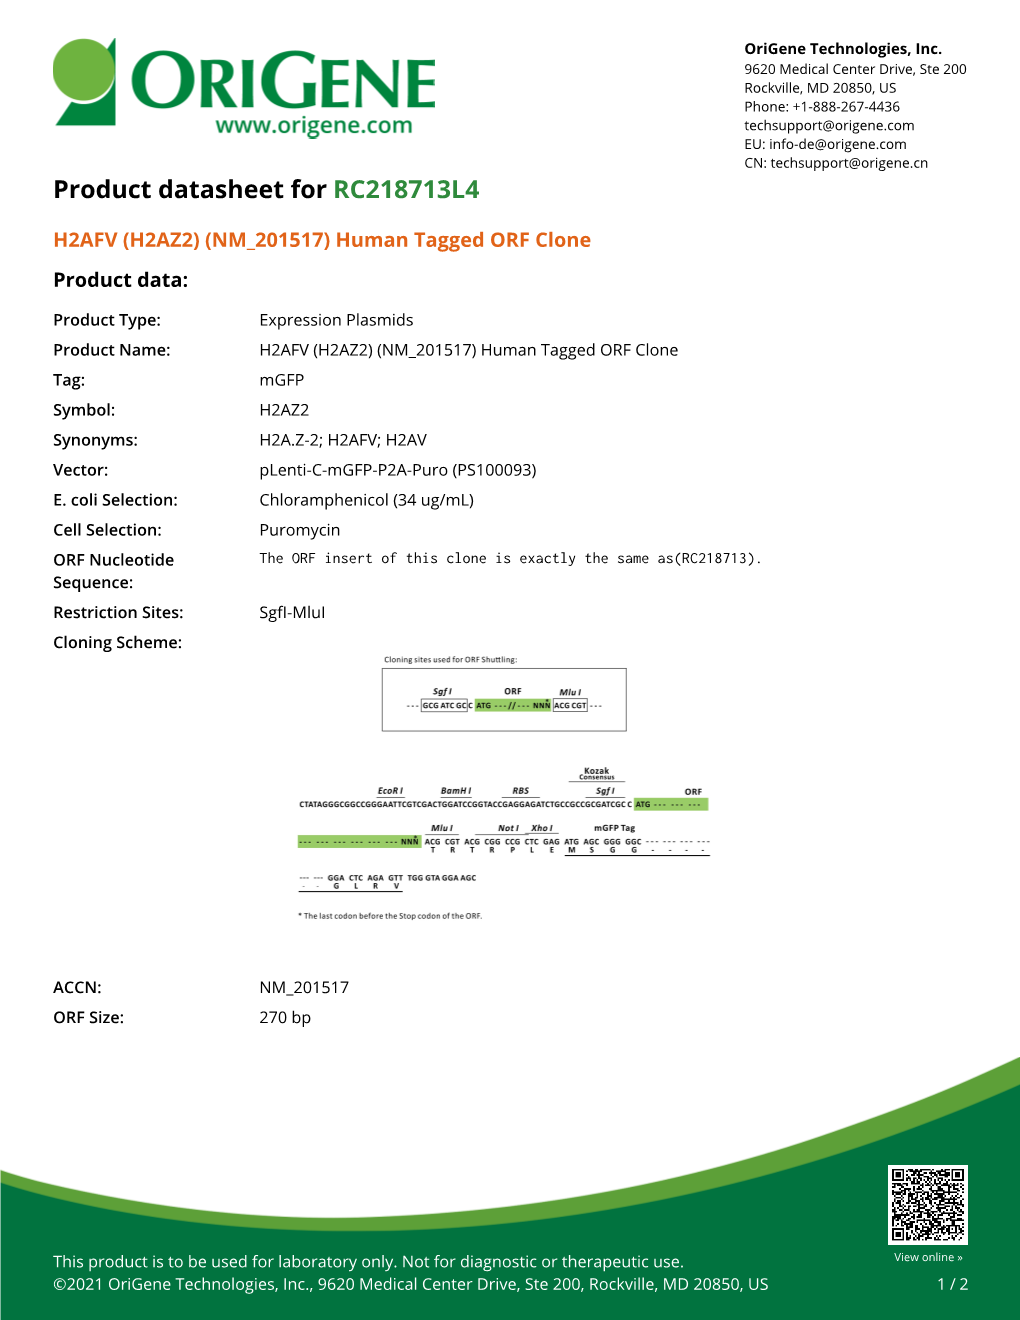 H2AFV (H2AZ2) (NM 201517) Human Tagged ORF Clone Product Data